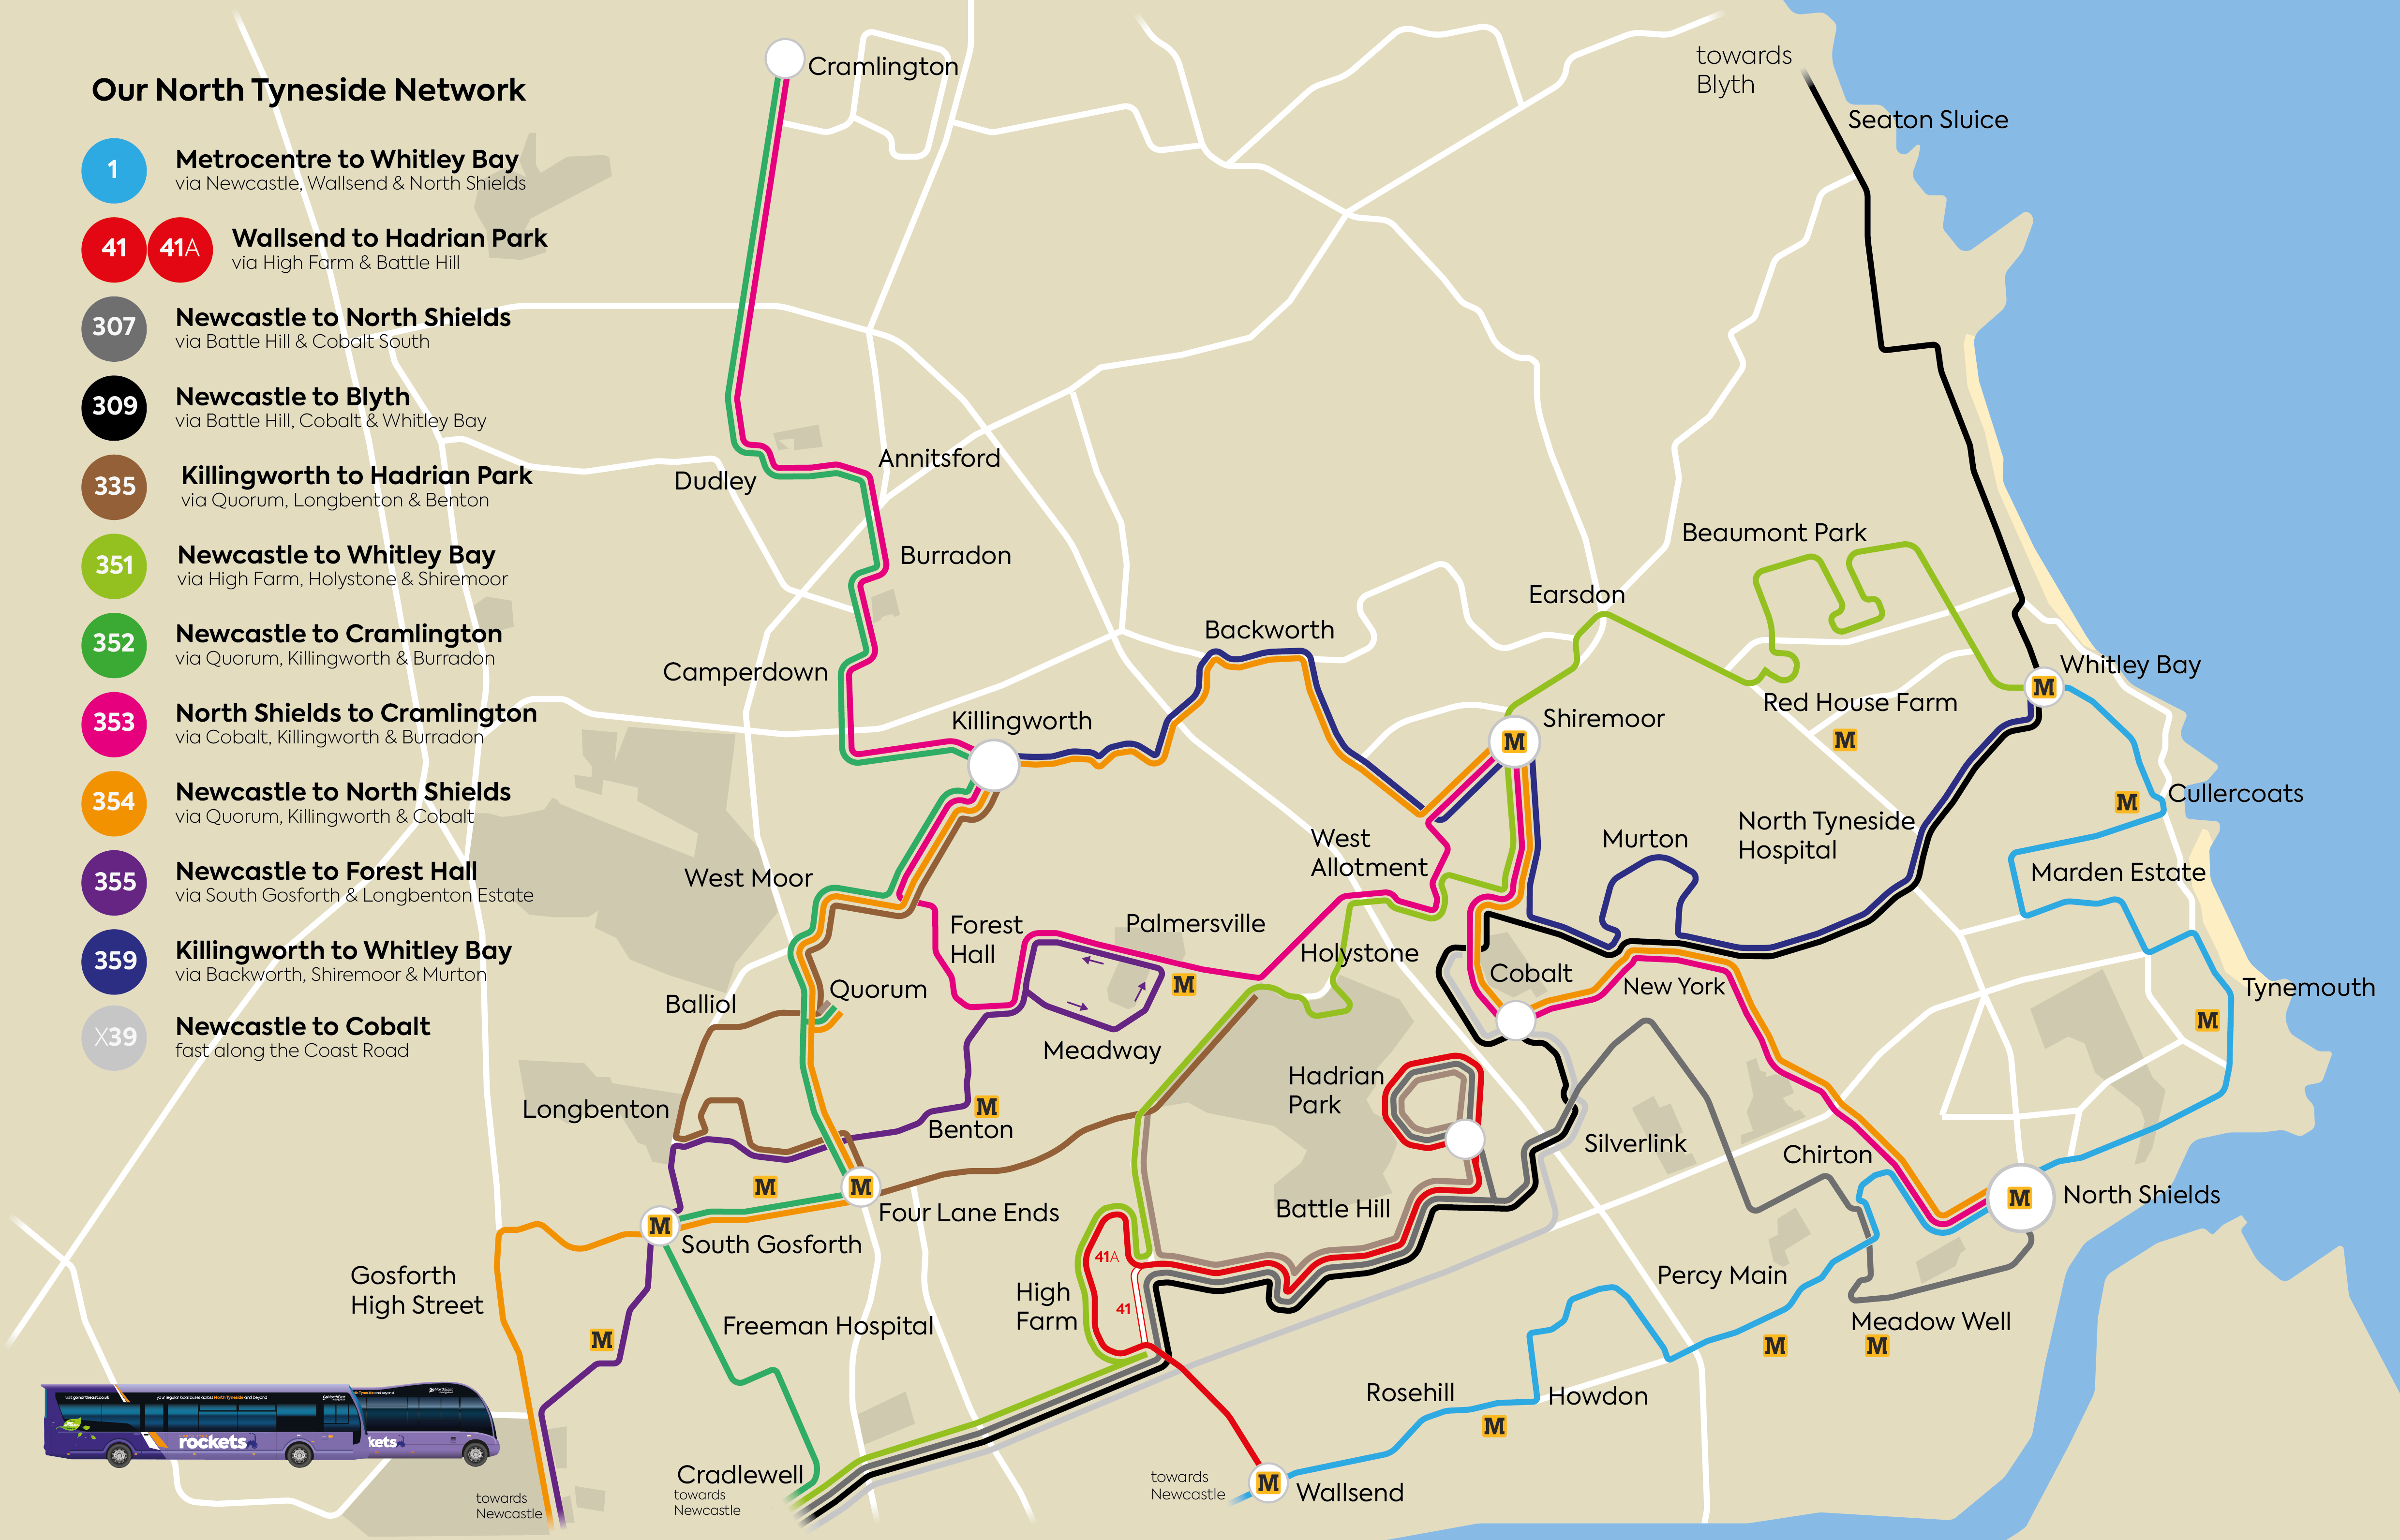 New North Tyneside Network Map